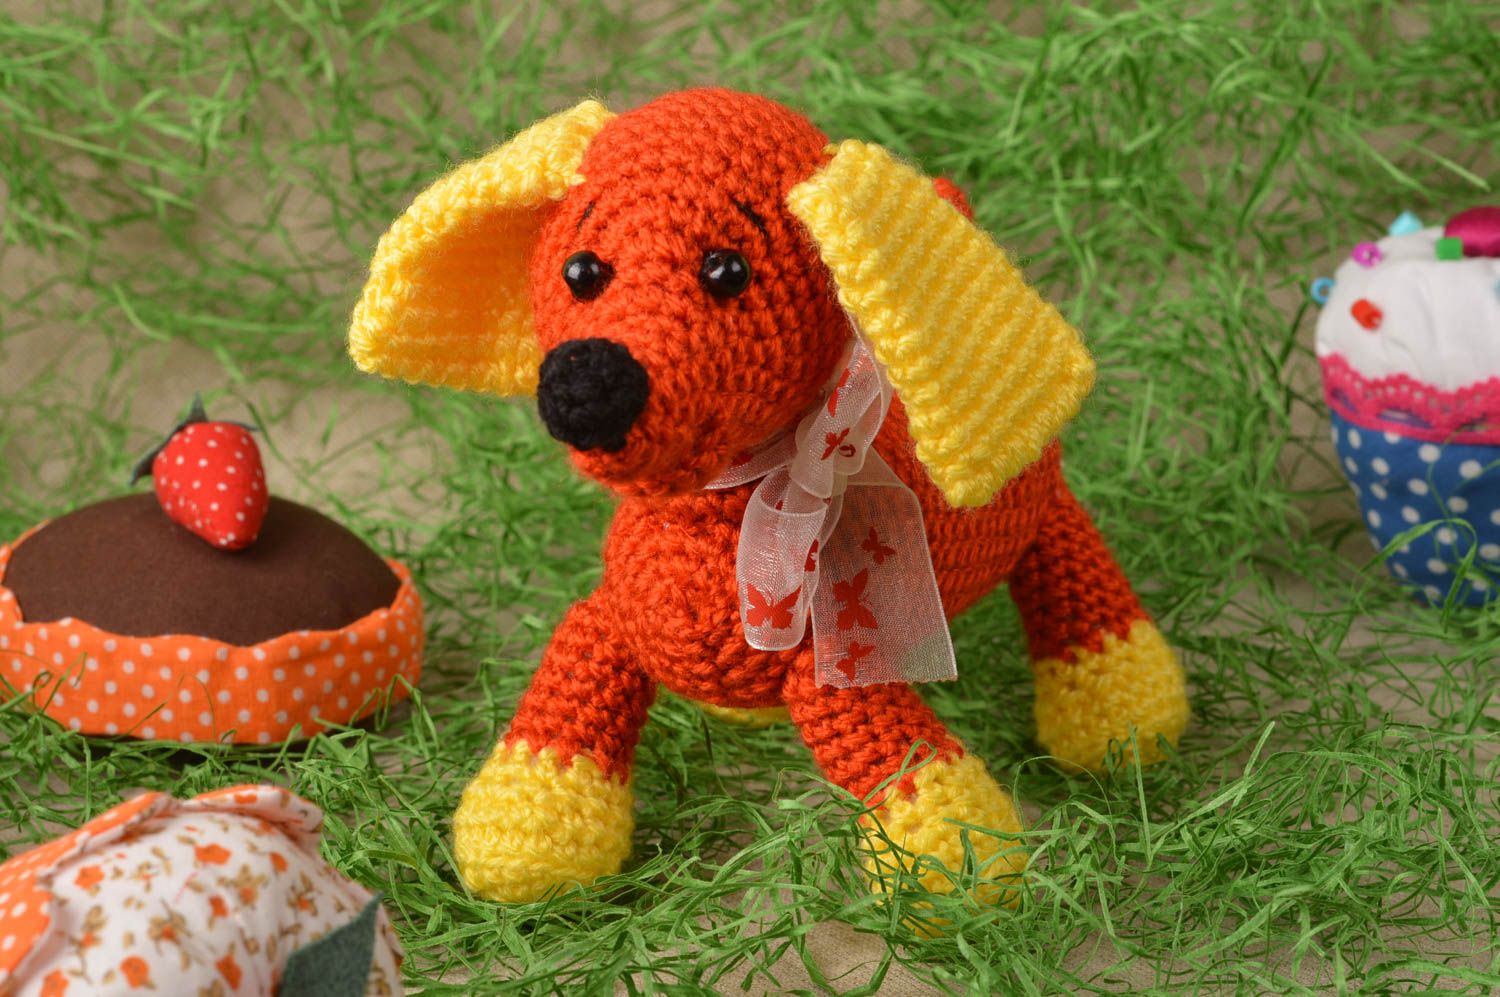 Handmade toy designer toy crochet toy baby toy nursery decor gift for children photo 1